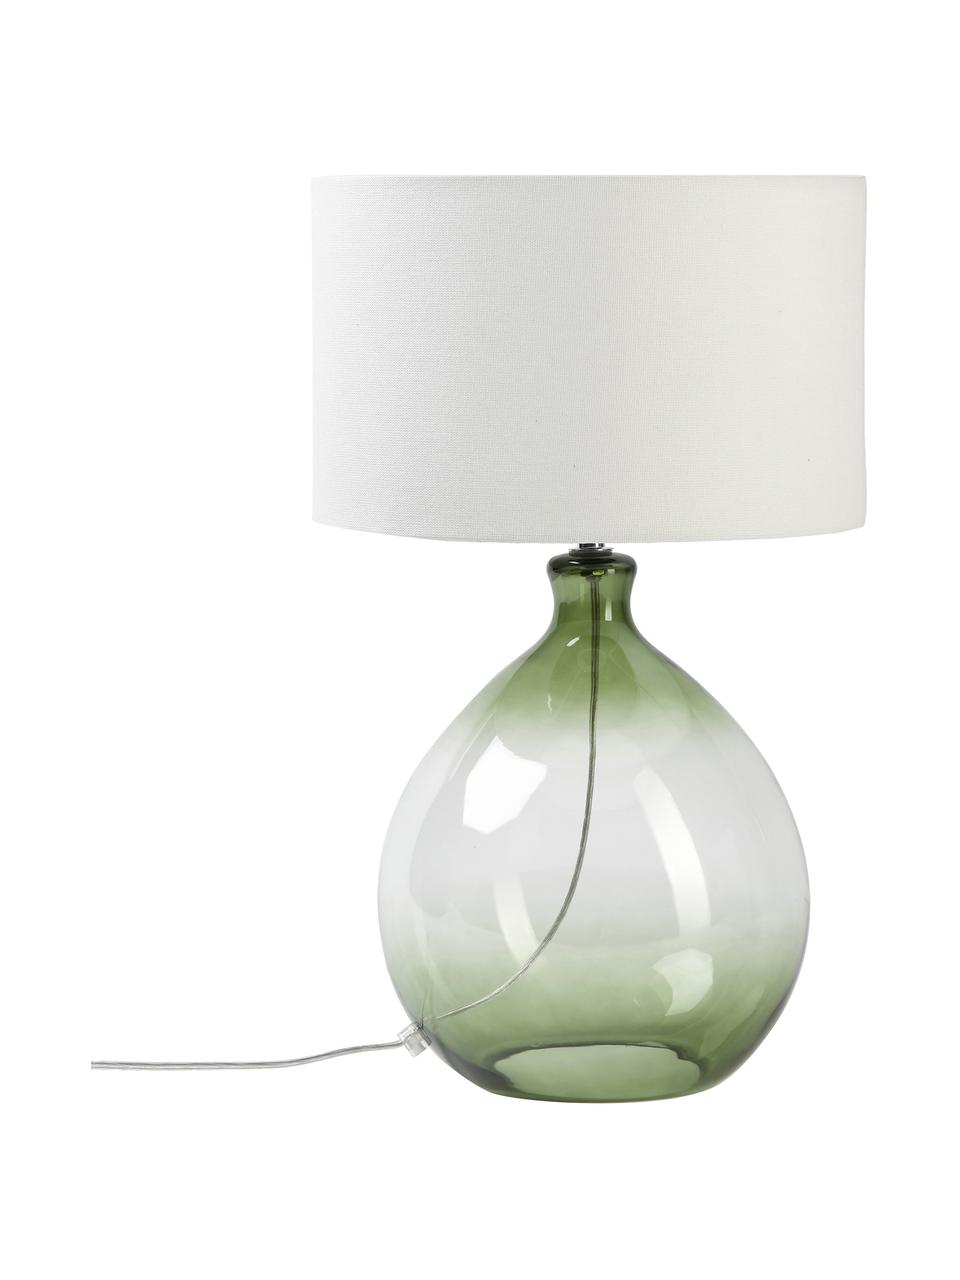 Grande lampe à poser en verre Zoya, Vert, blanc, Ø 30 x haut. 51 cm